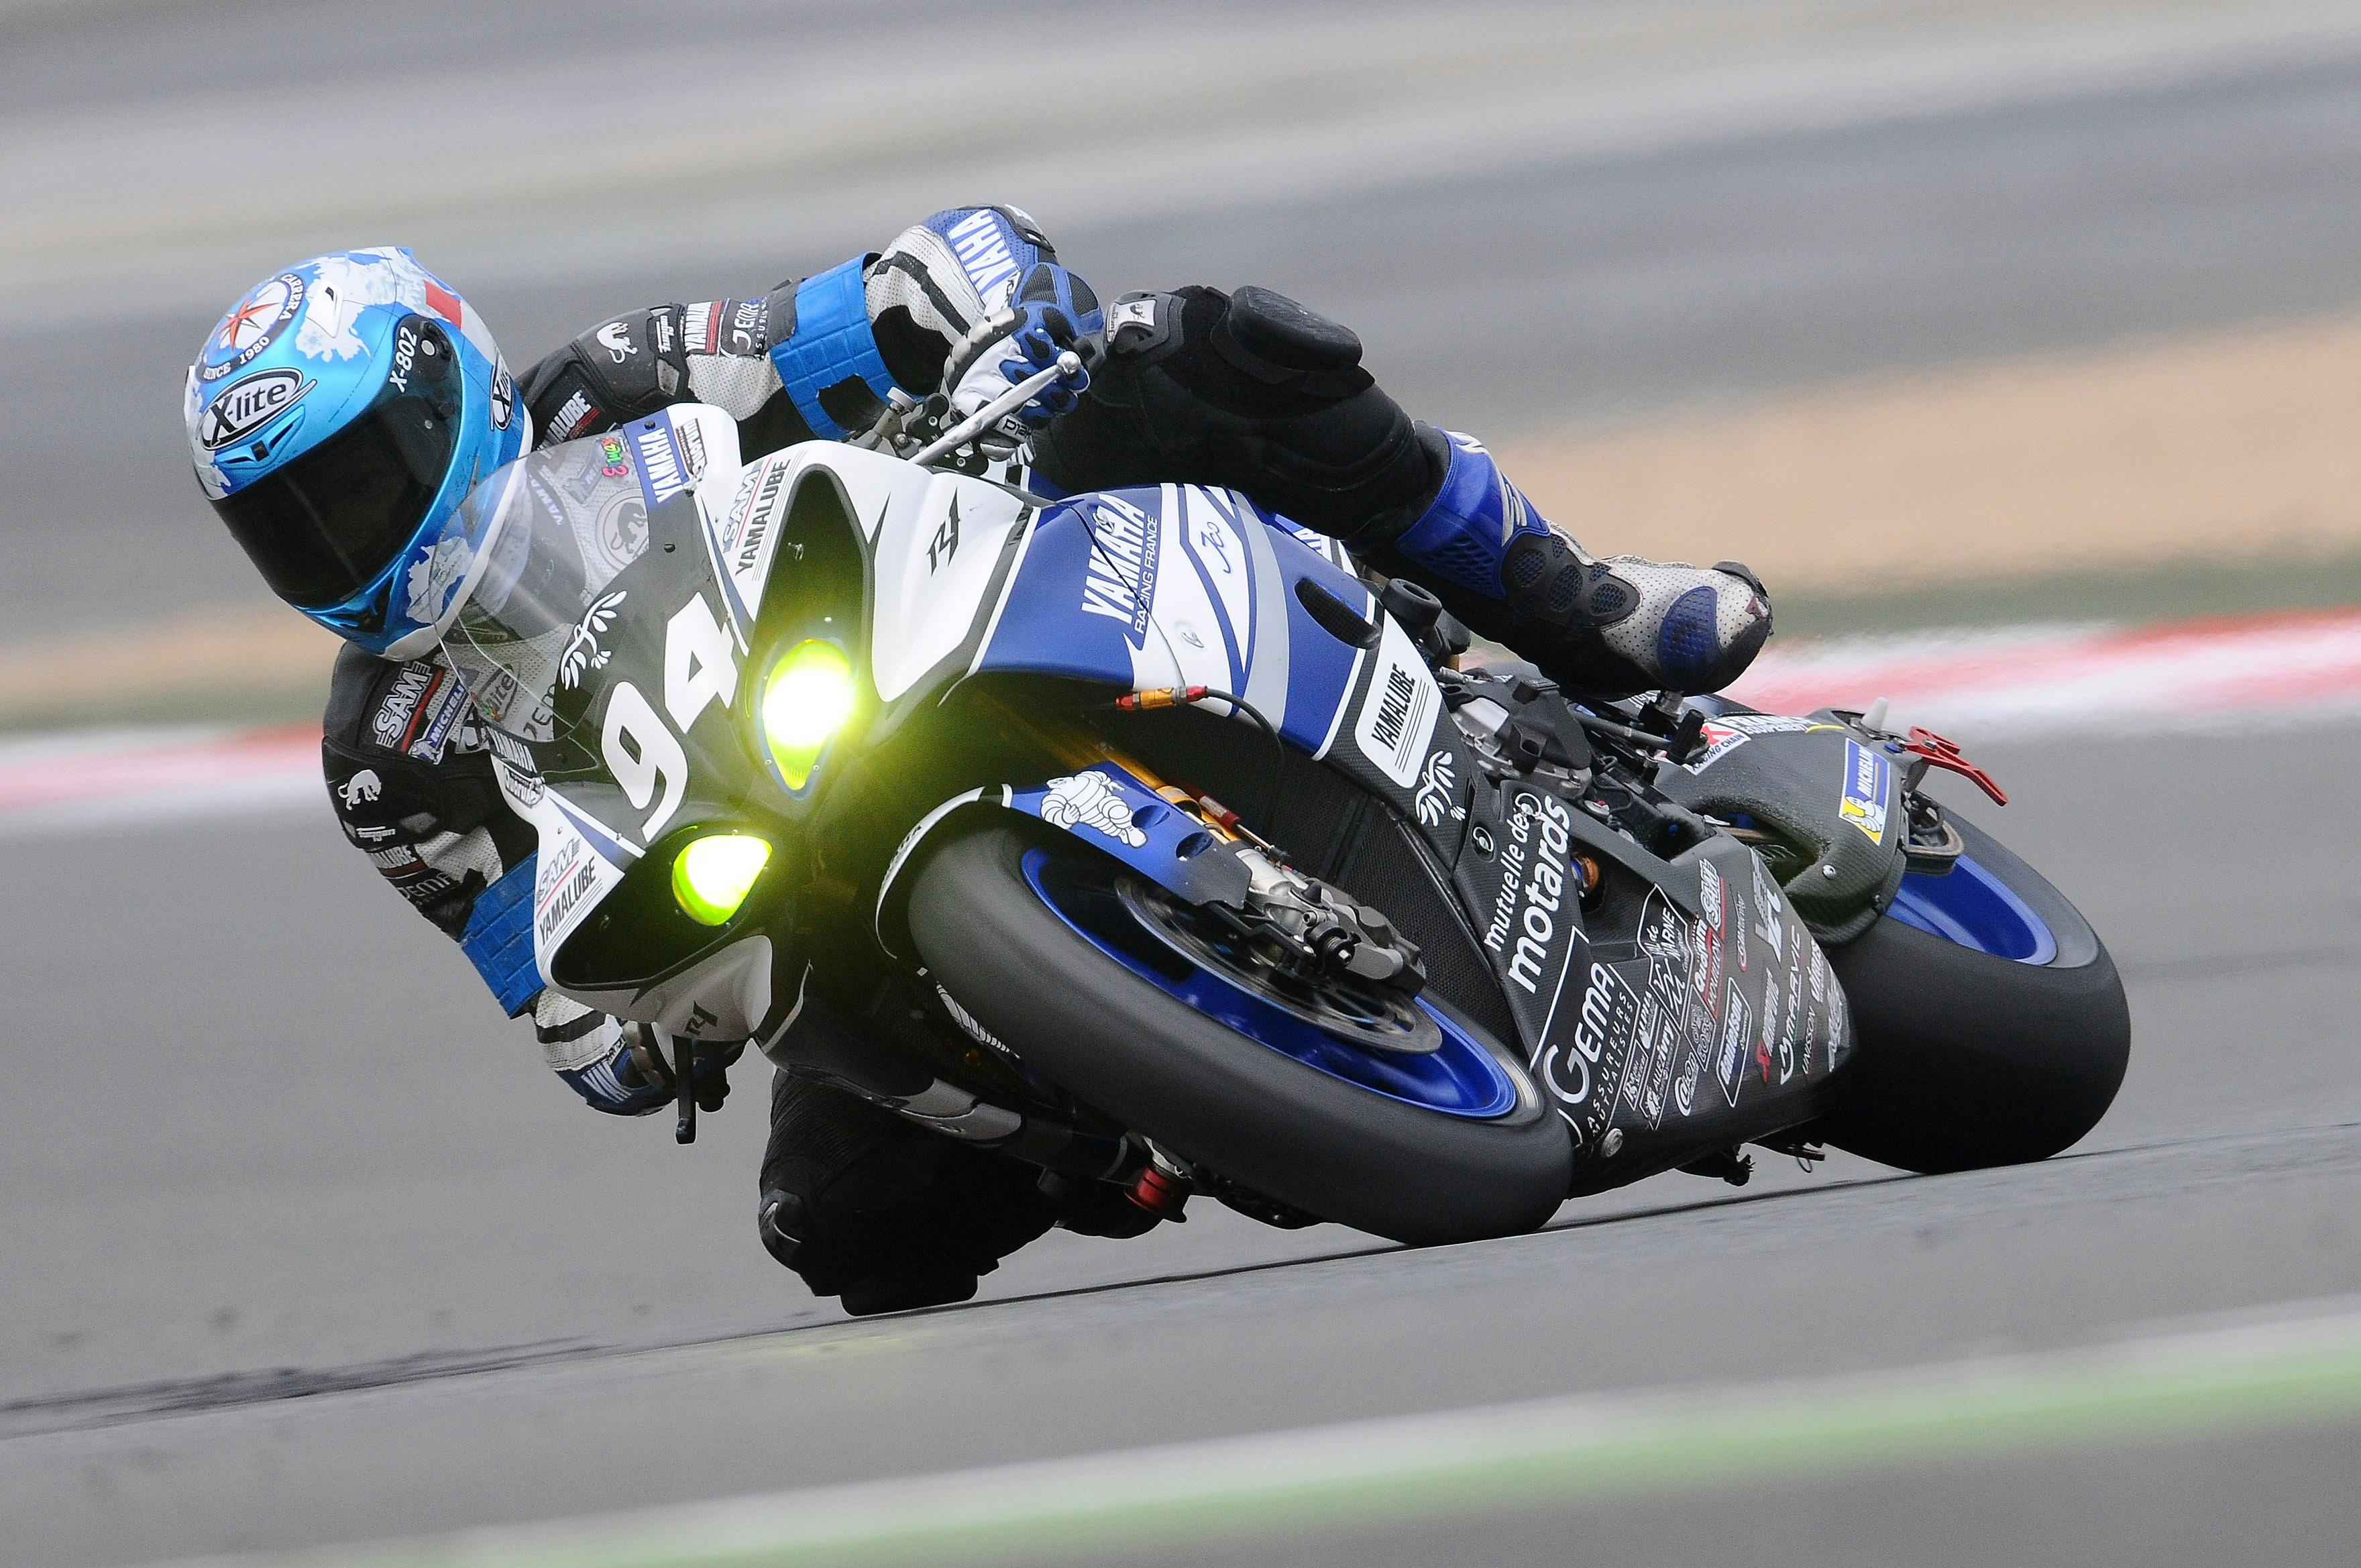 [Bild: motorcycle-racer-racing-race-speed-39693...jpg&fm=jpg]